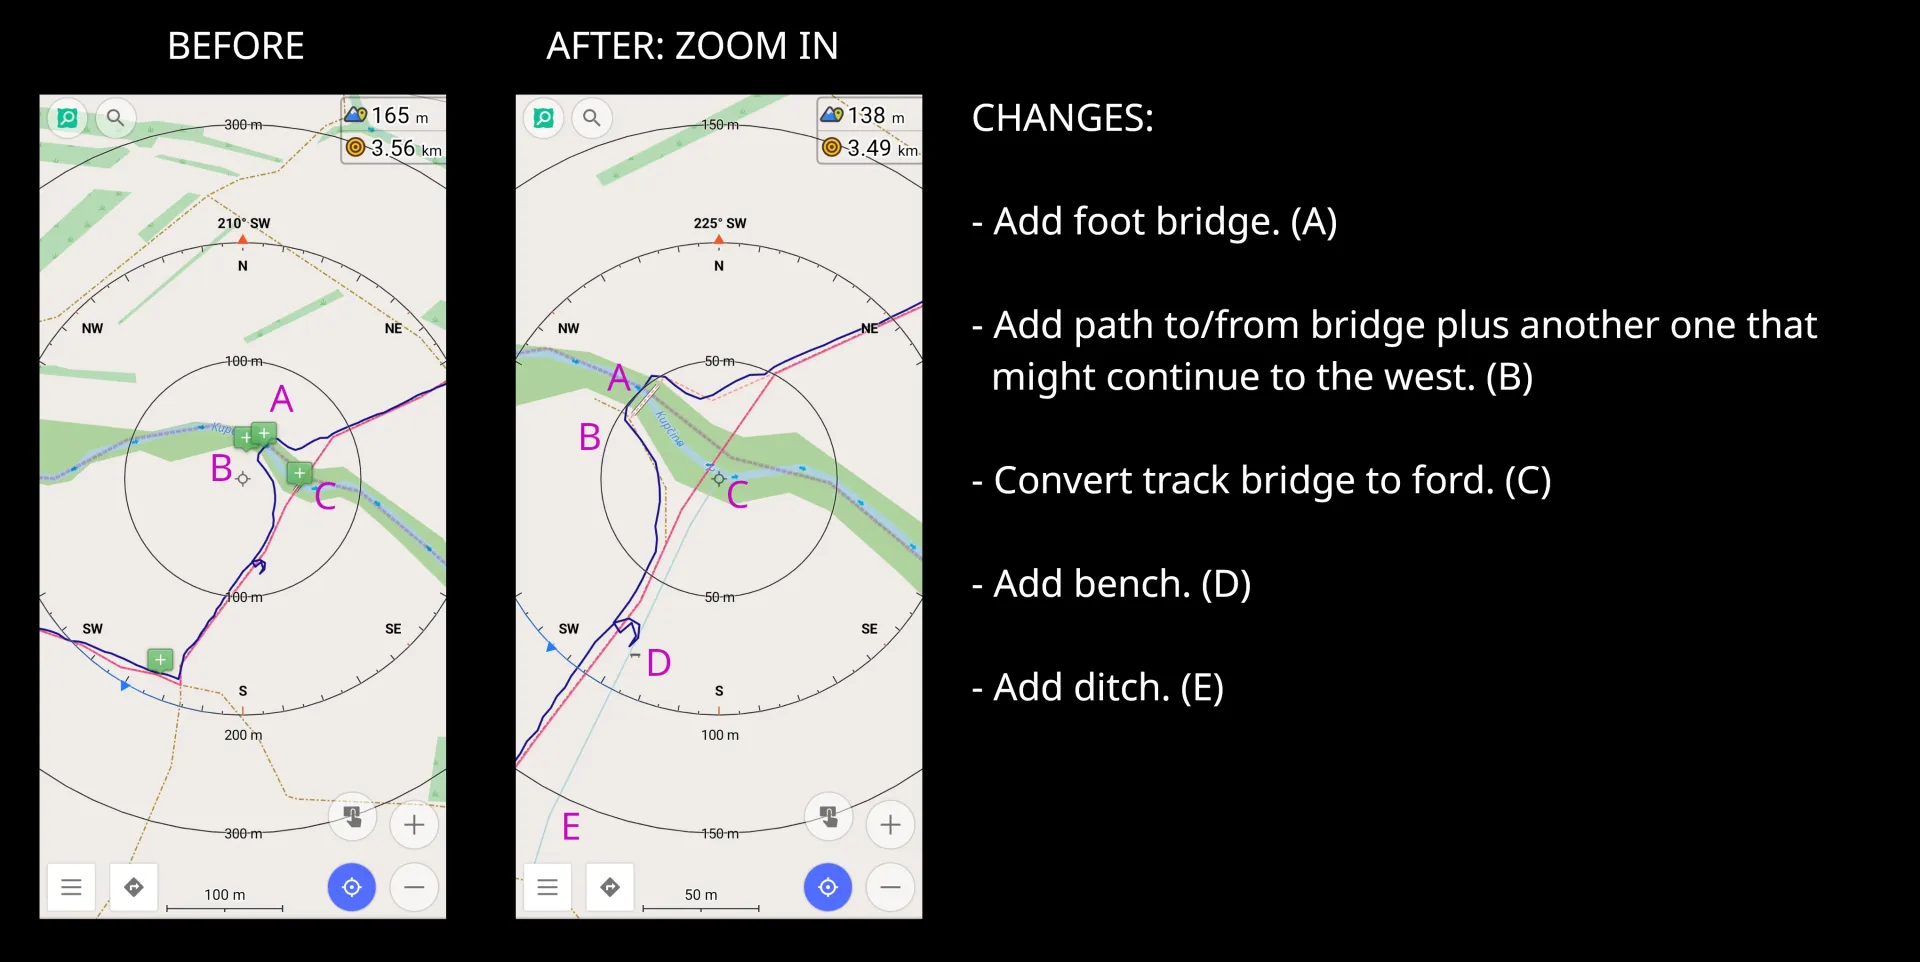 Highlights of OSM changes: add foot bridge; add path; change track bridge to ford; add ditch; add bench